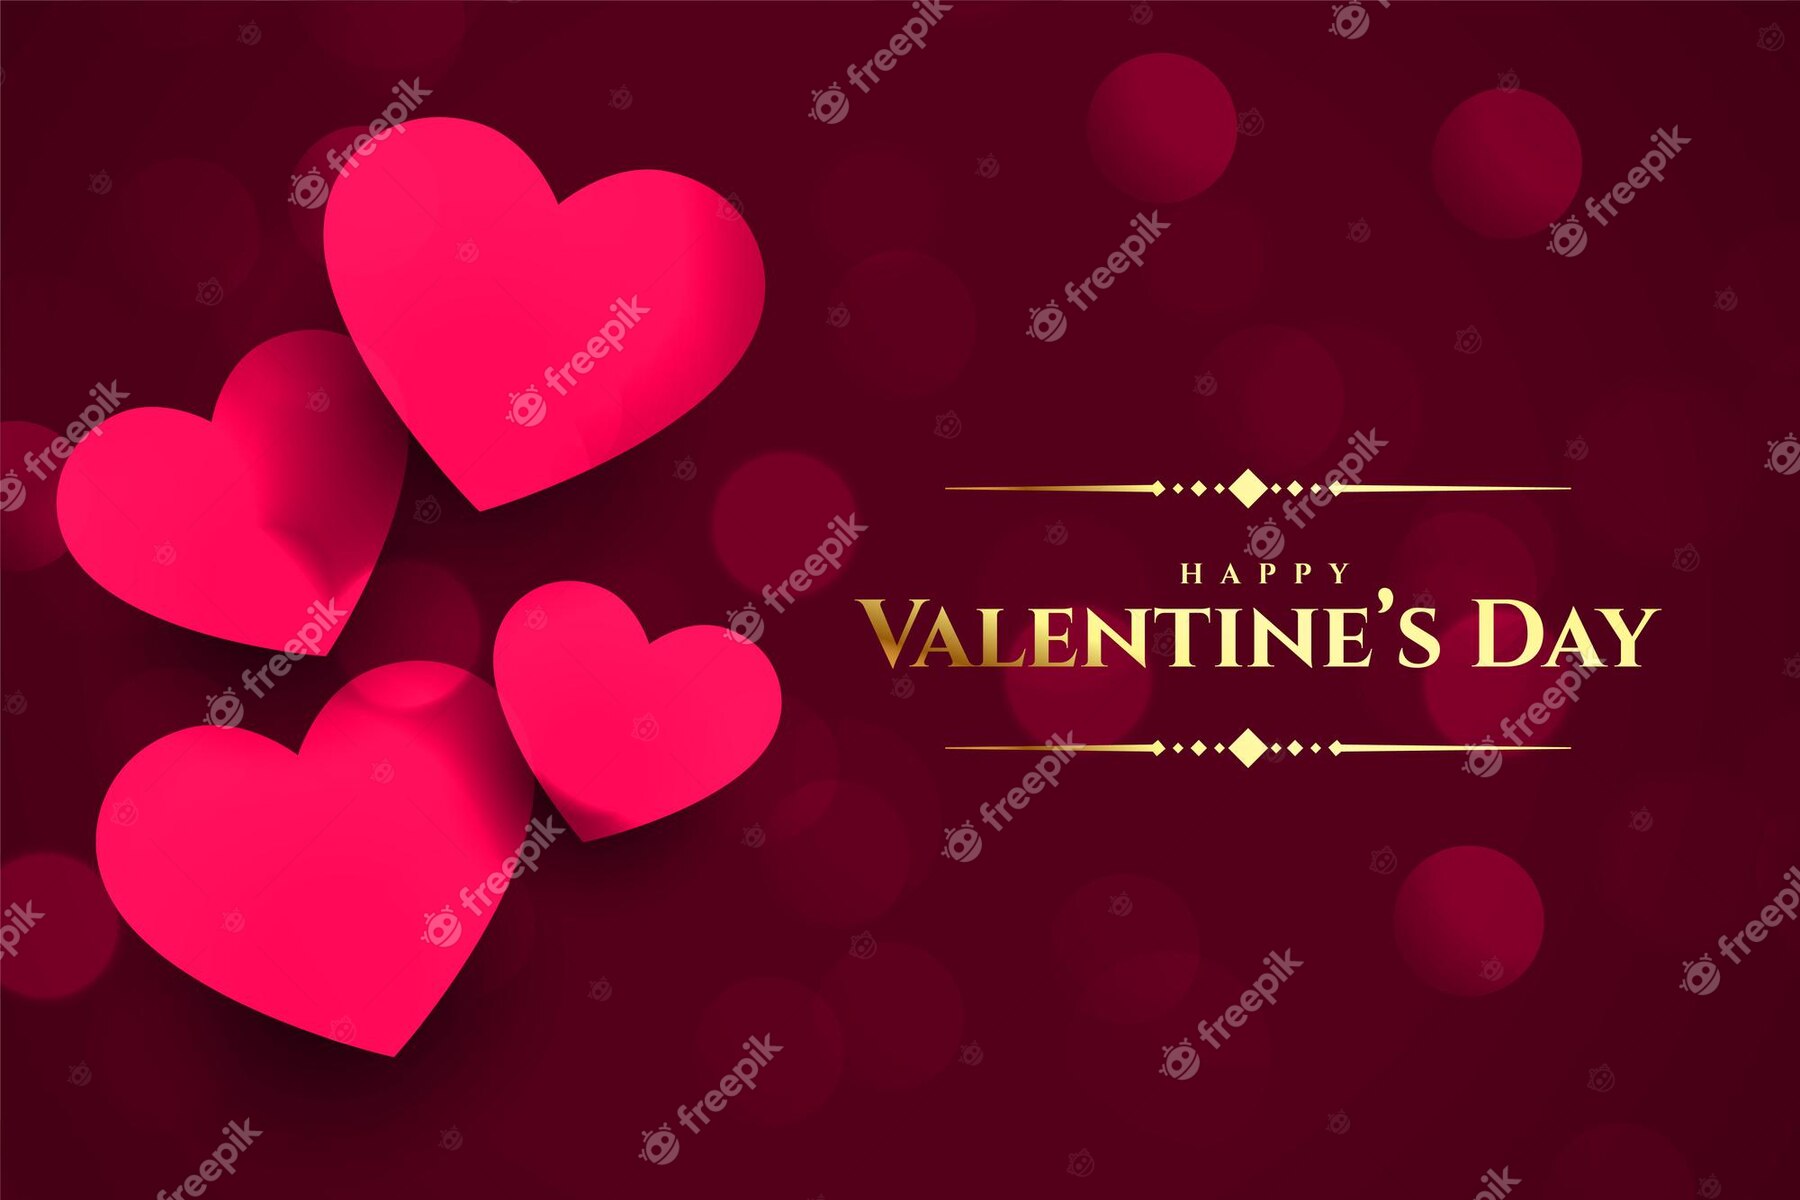 Valentines Day Romantic Card Design 1017 36197